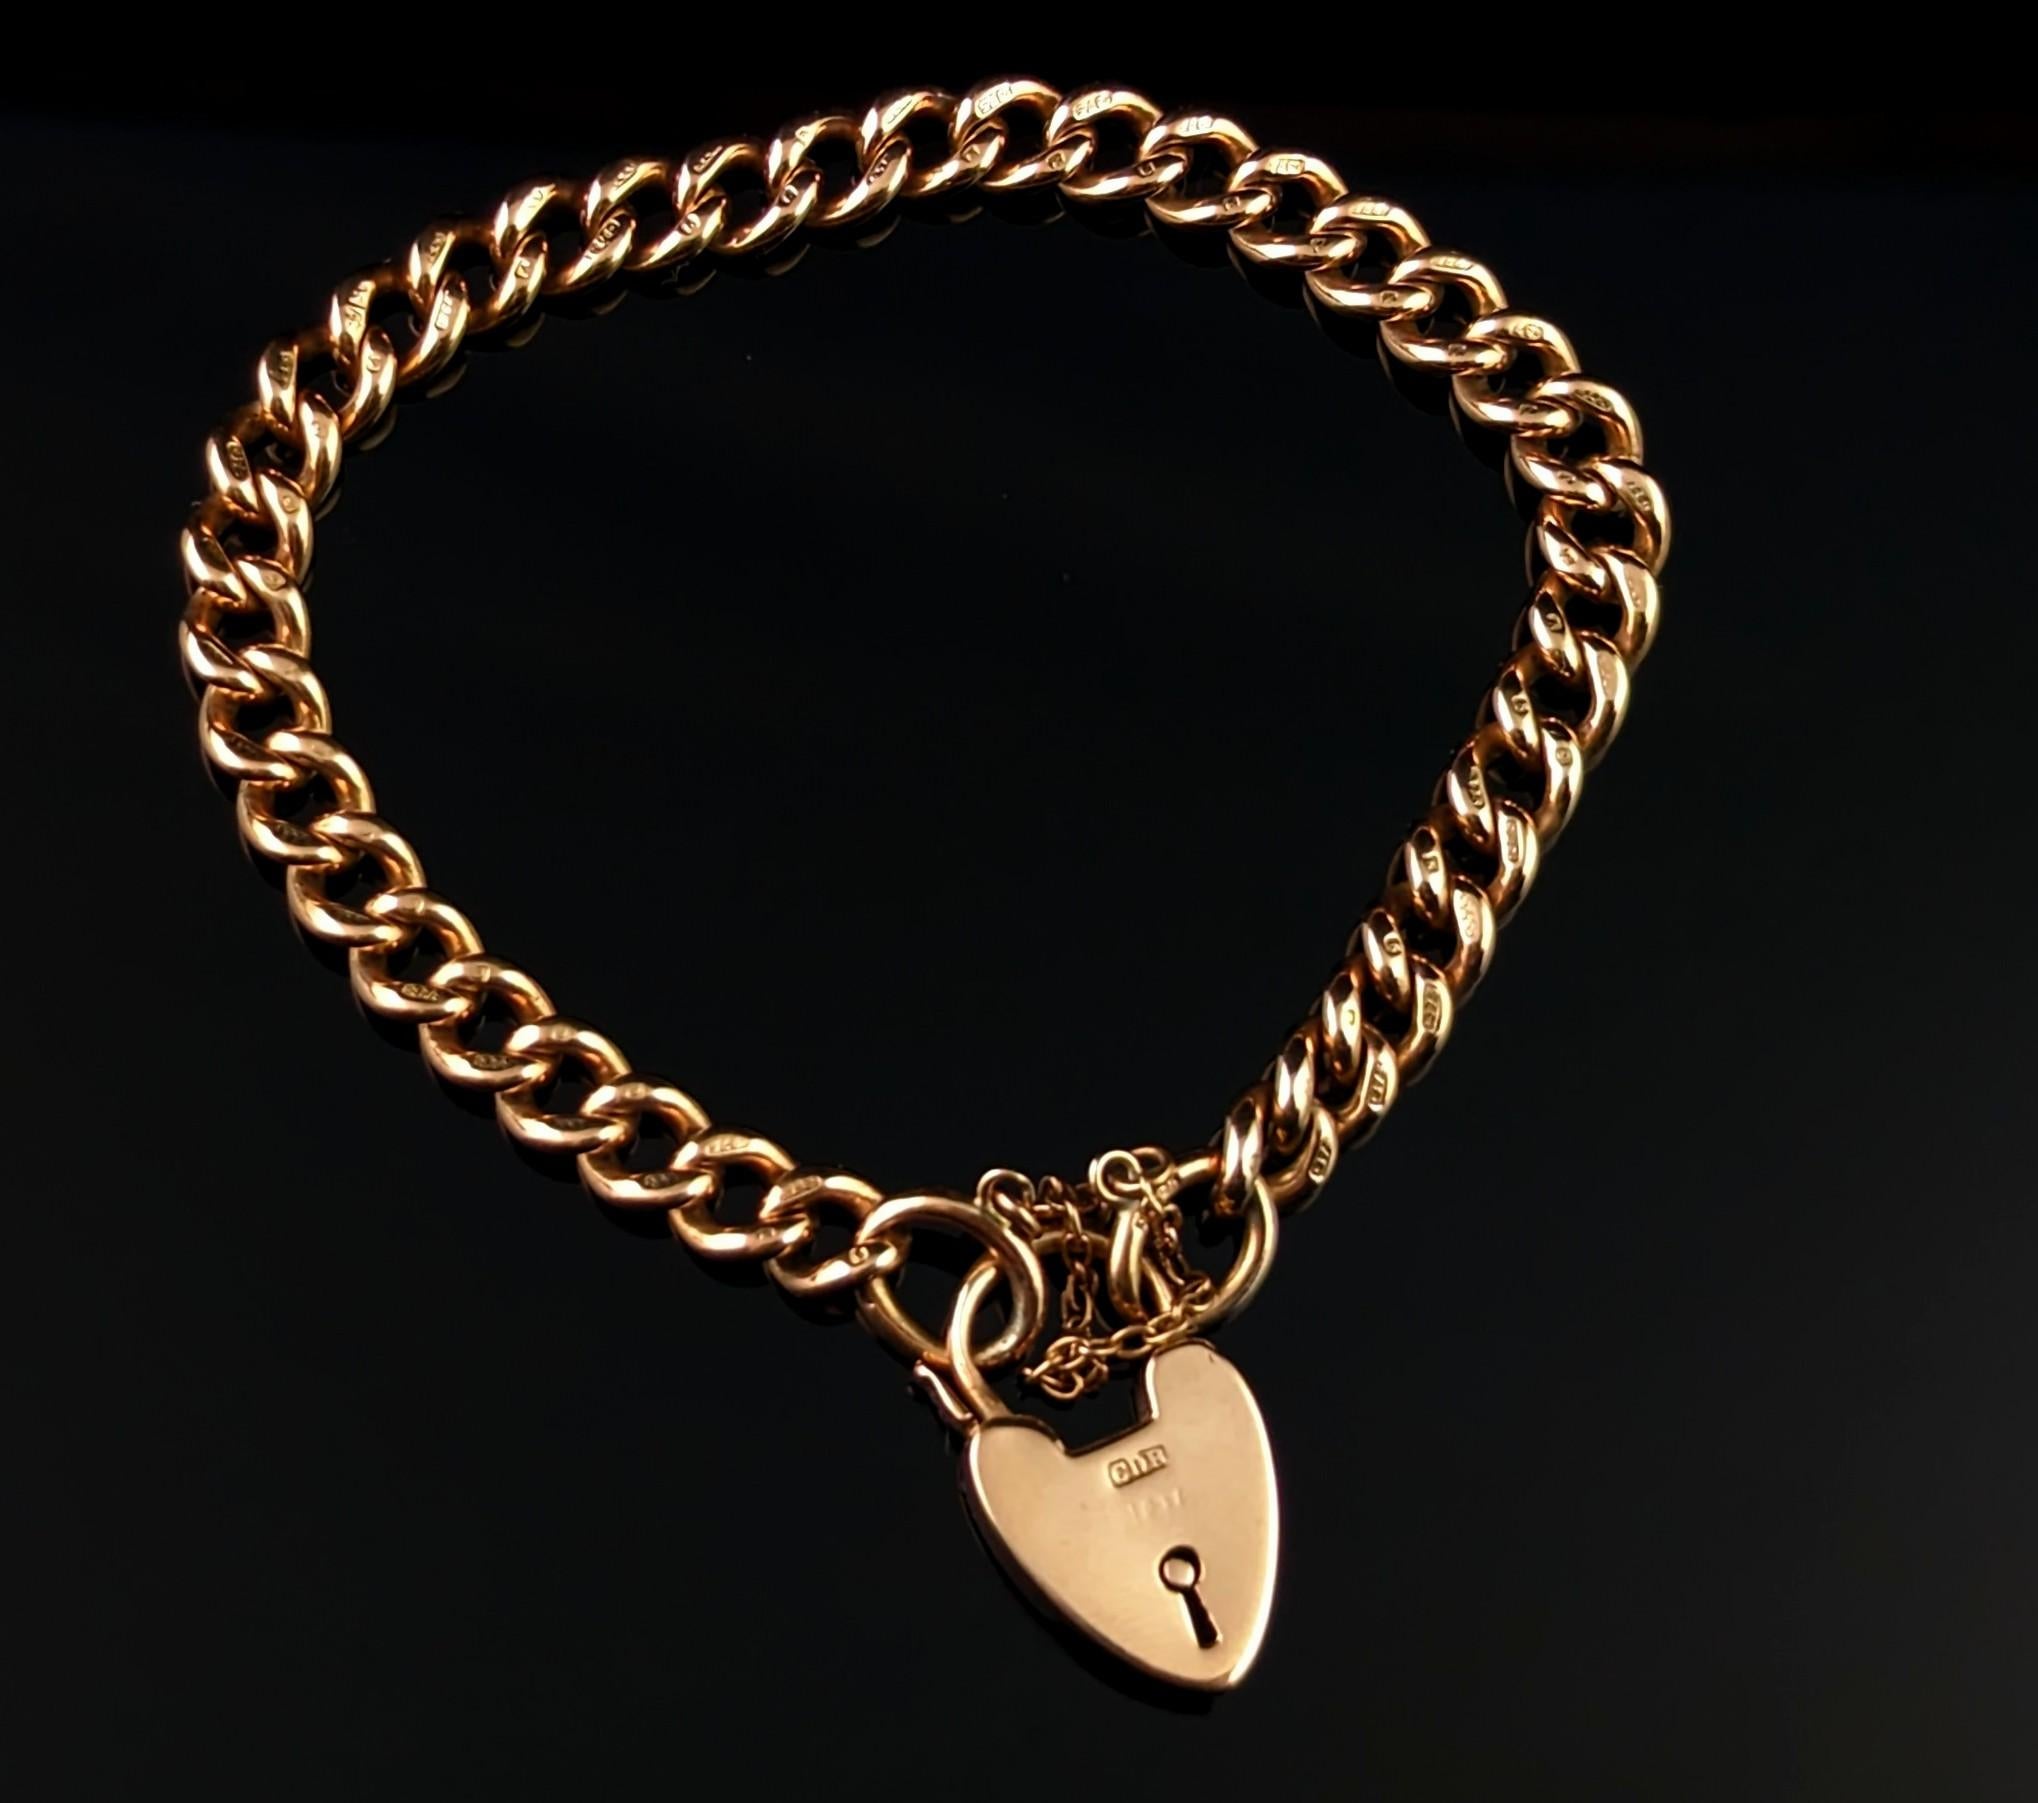 Antique 9k solid gold curb bracelet, Edwardian, heart padlock clasp  10